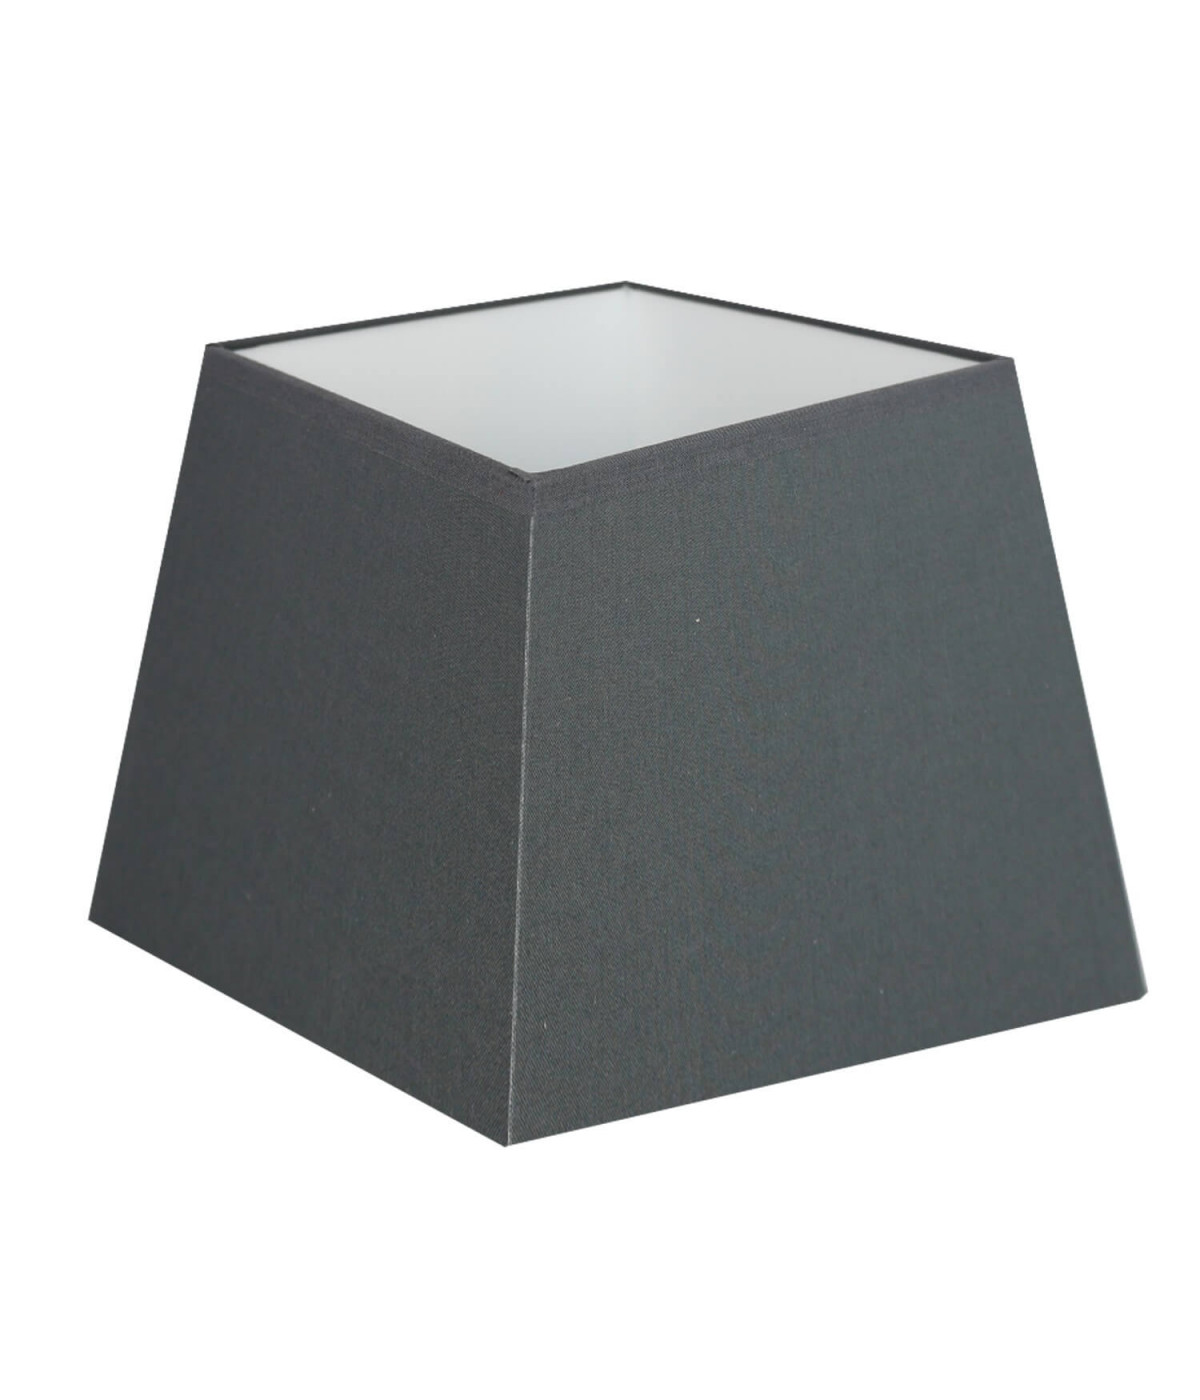 Mouse gray square pyramid lampshade